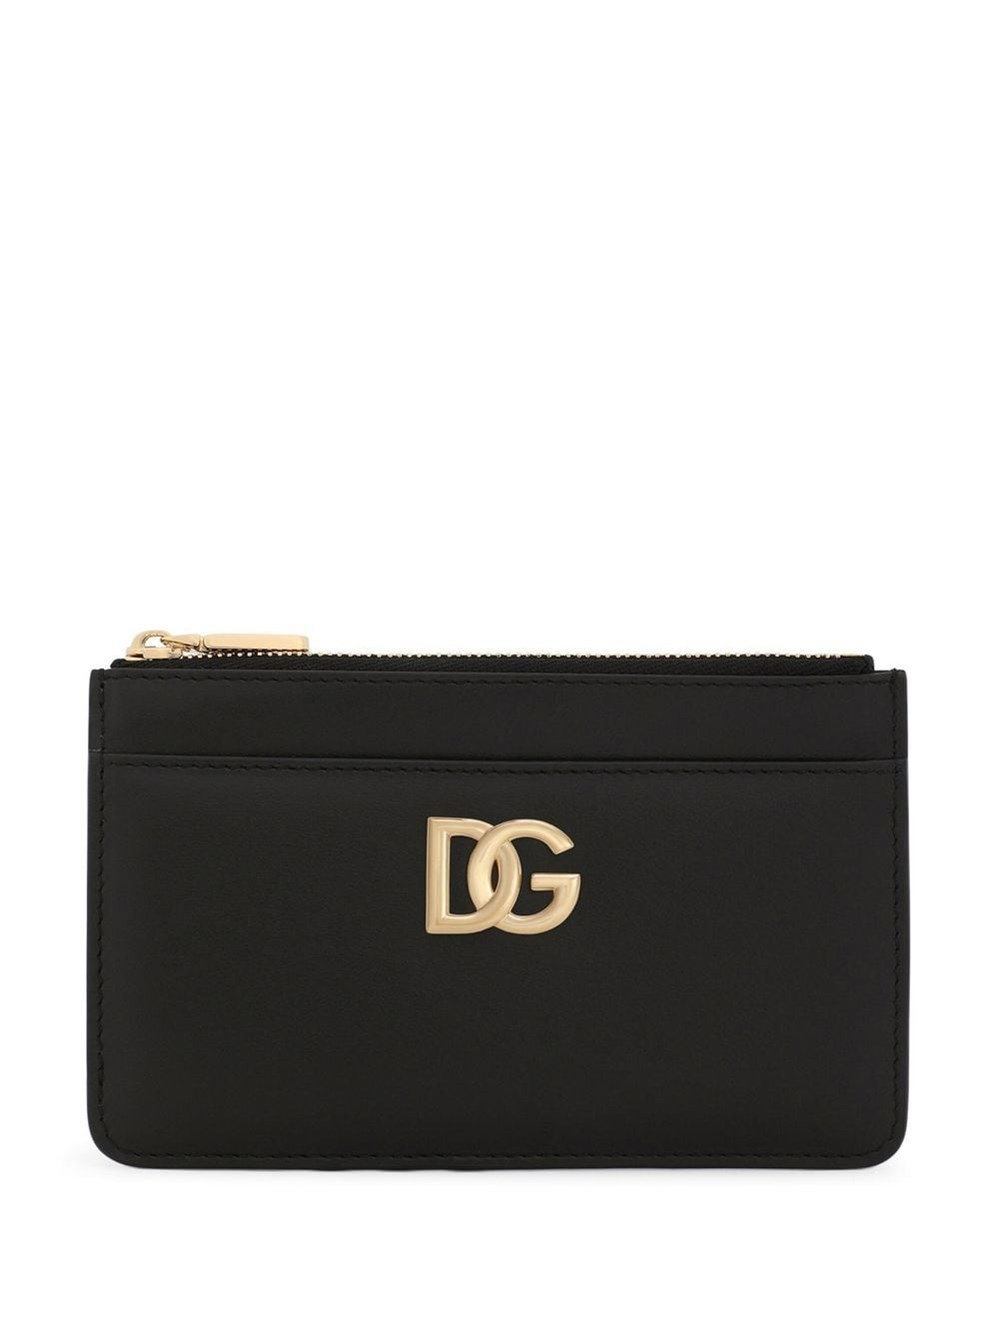 Dolce & Gabbana Wallet With Zip In Black